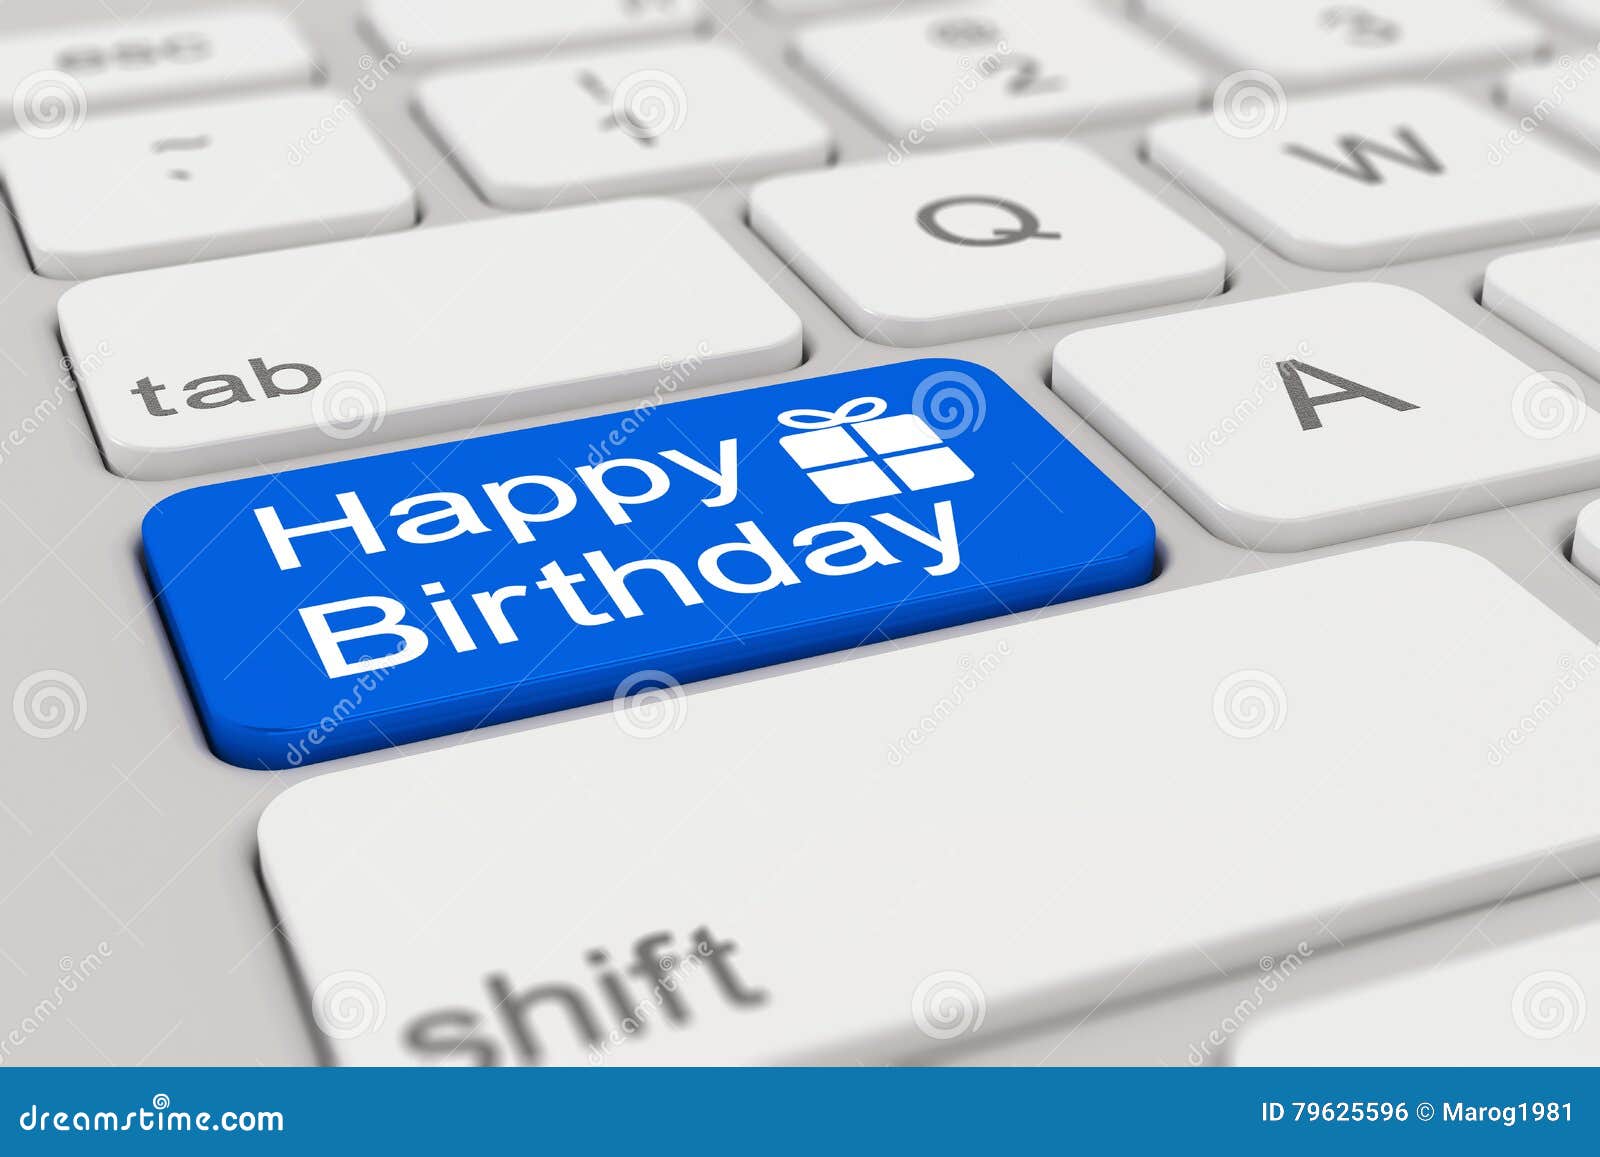 d-keyboard-happy-birthday-blue-rendering-white-button-79625596.jpg